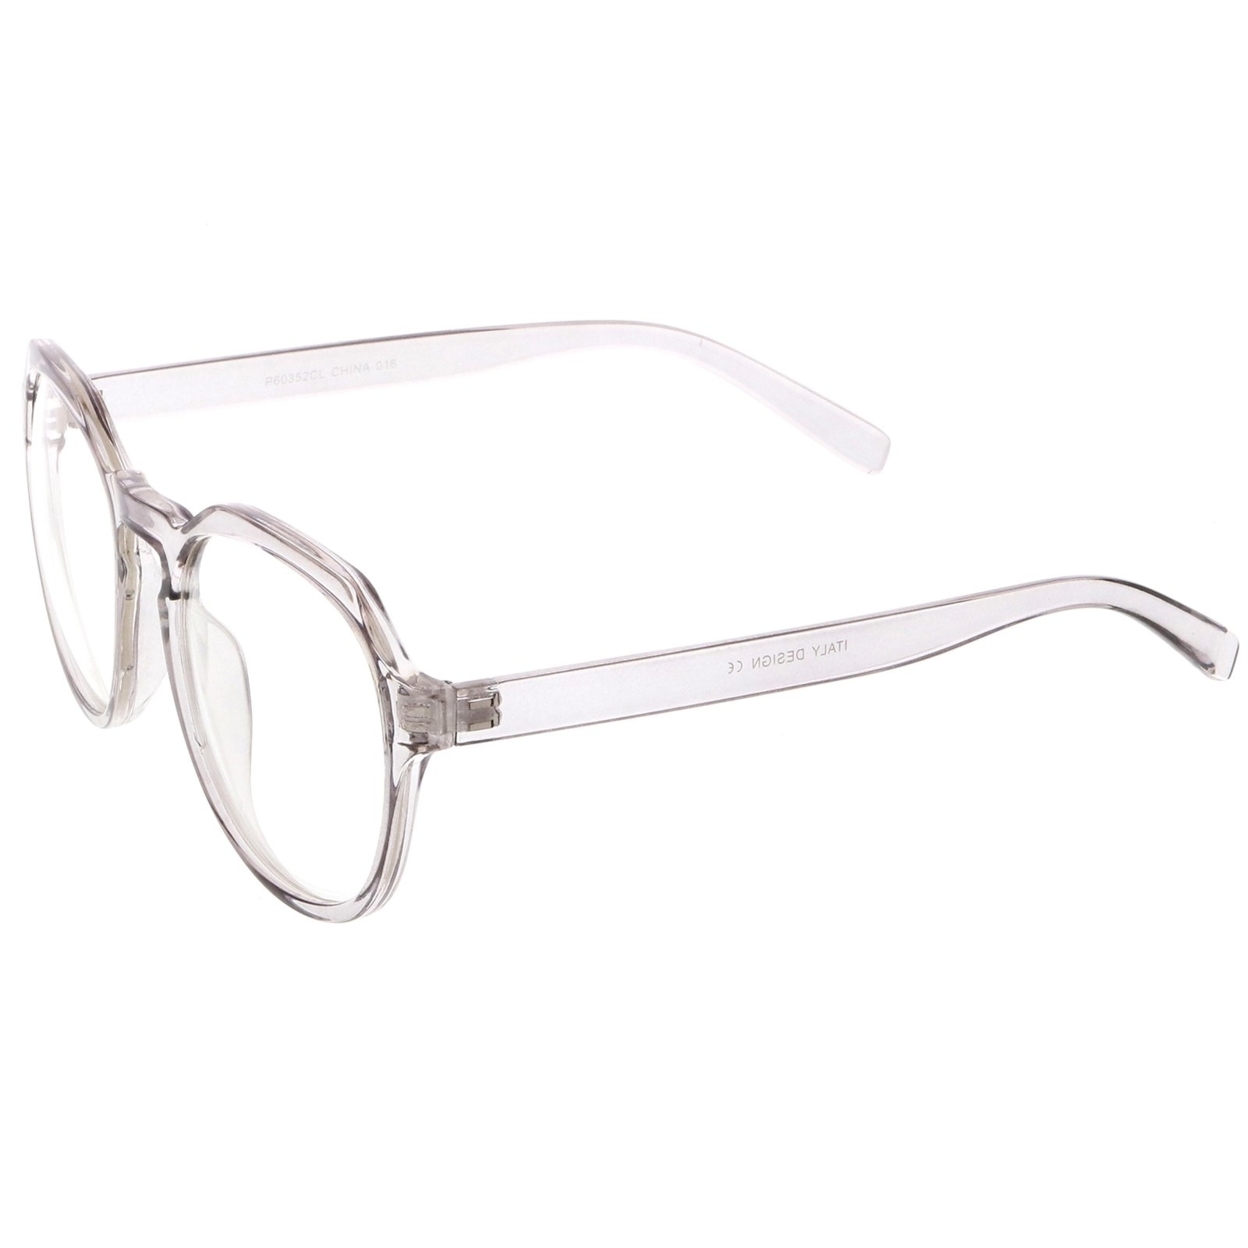 Modern Keyhole Nose Bridge Clear Lens Round Eyeglasses 55mm - Tortoise / Clear